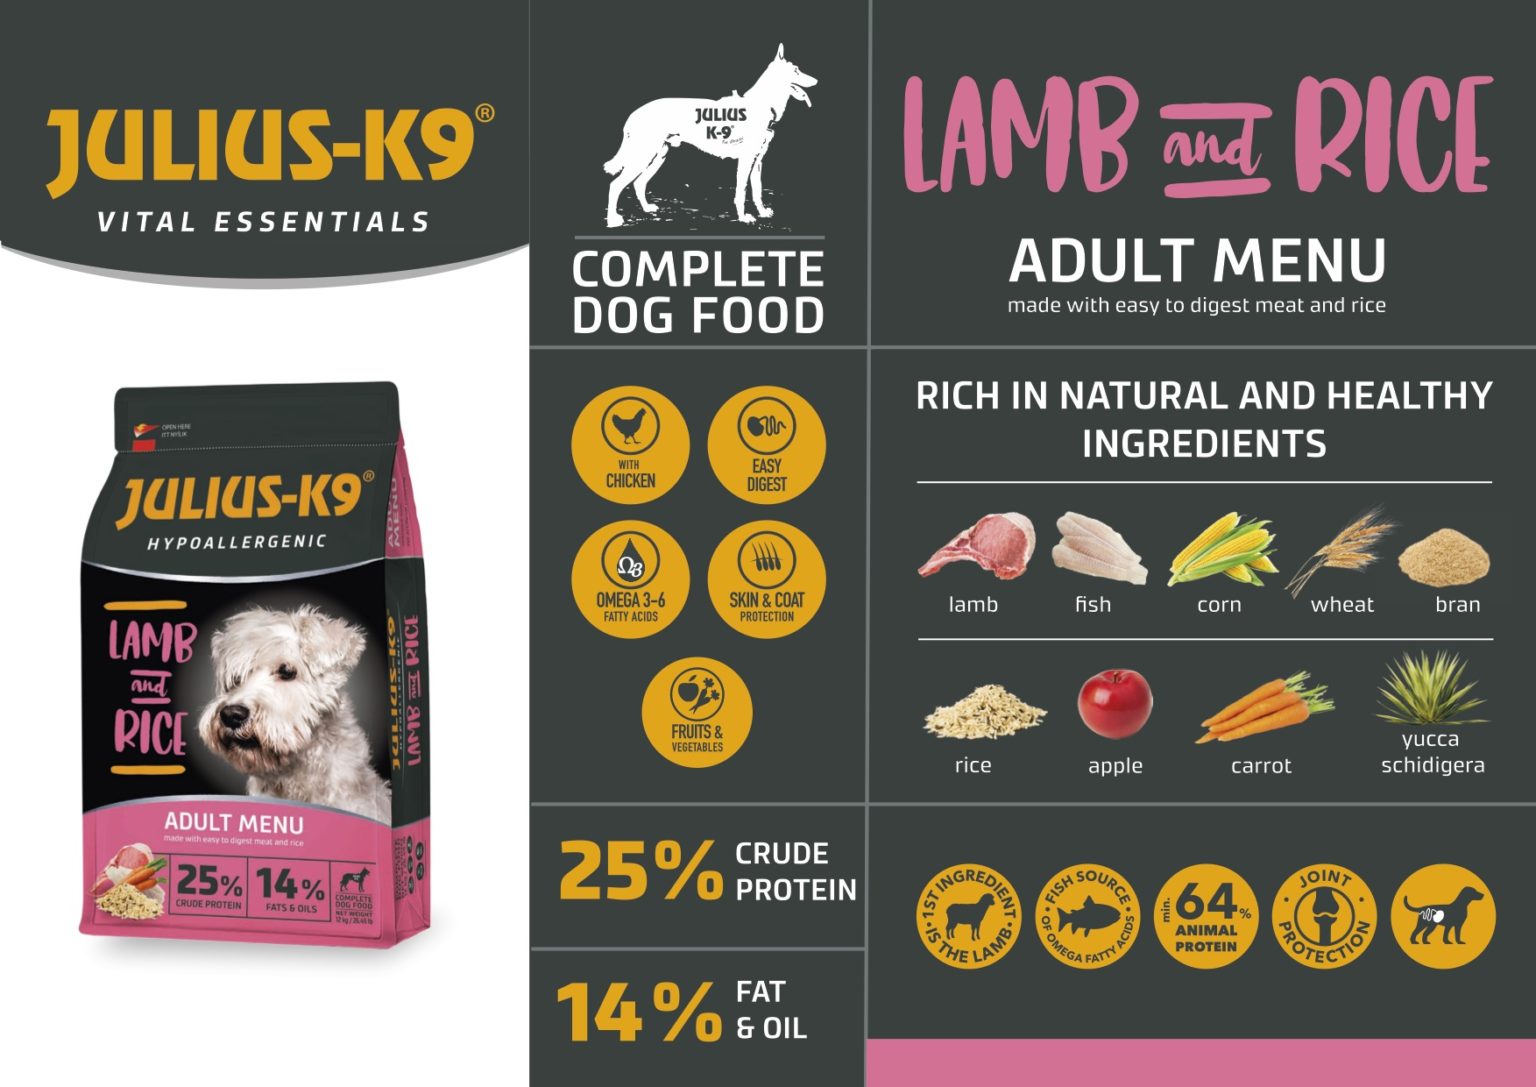 JULIUSK9® Lamb & Rice Hypoallergenic Dog Food